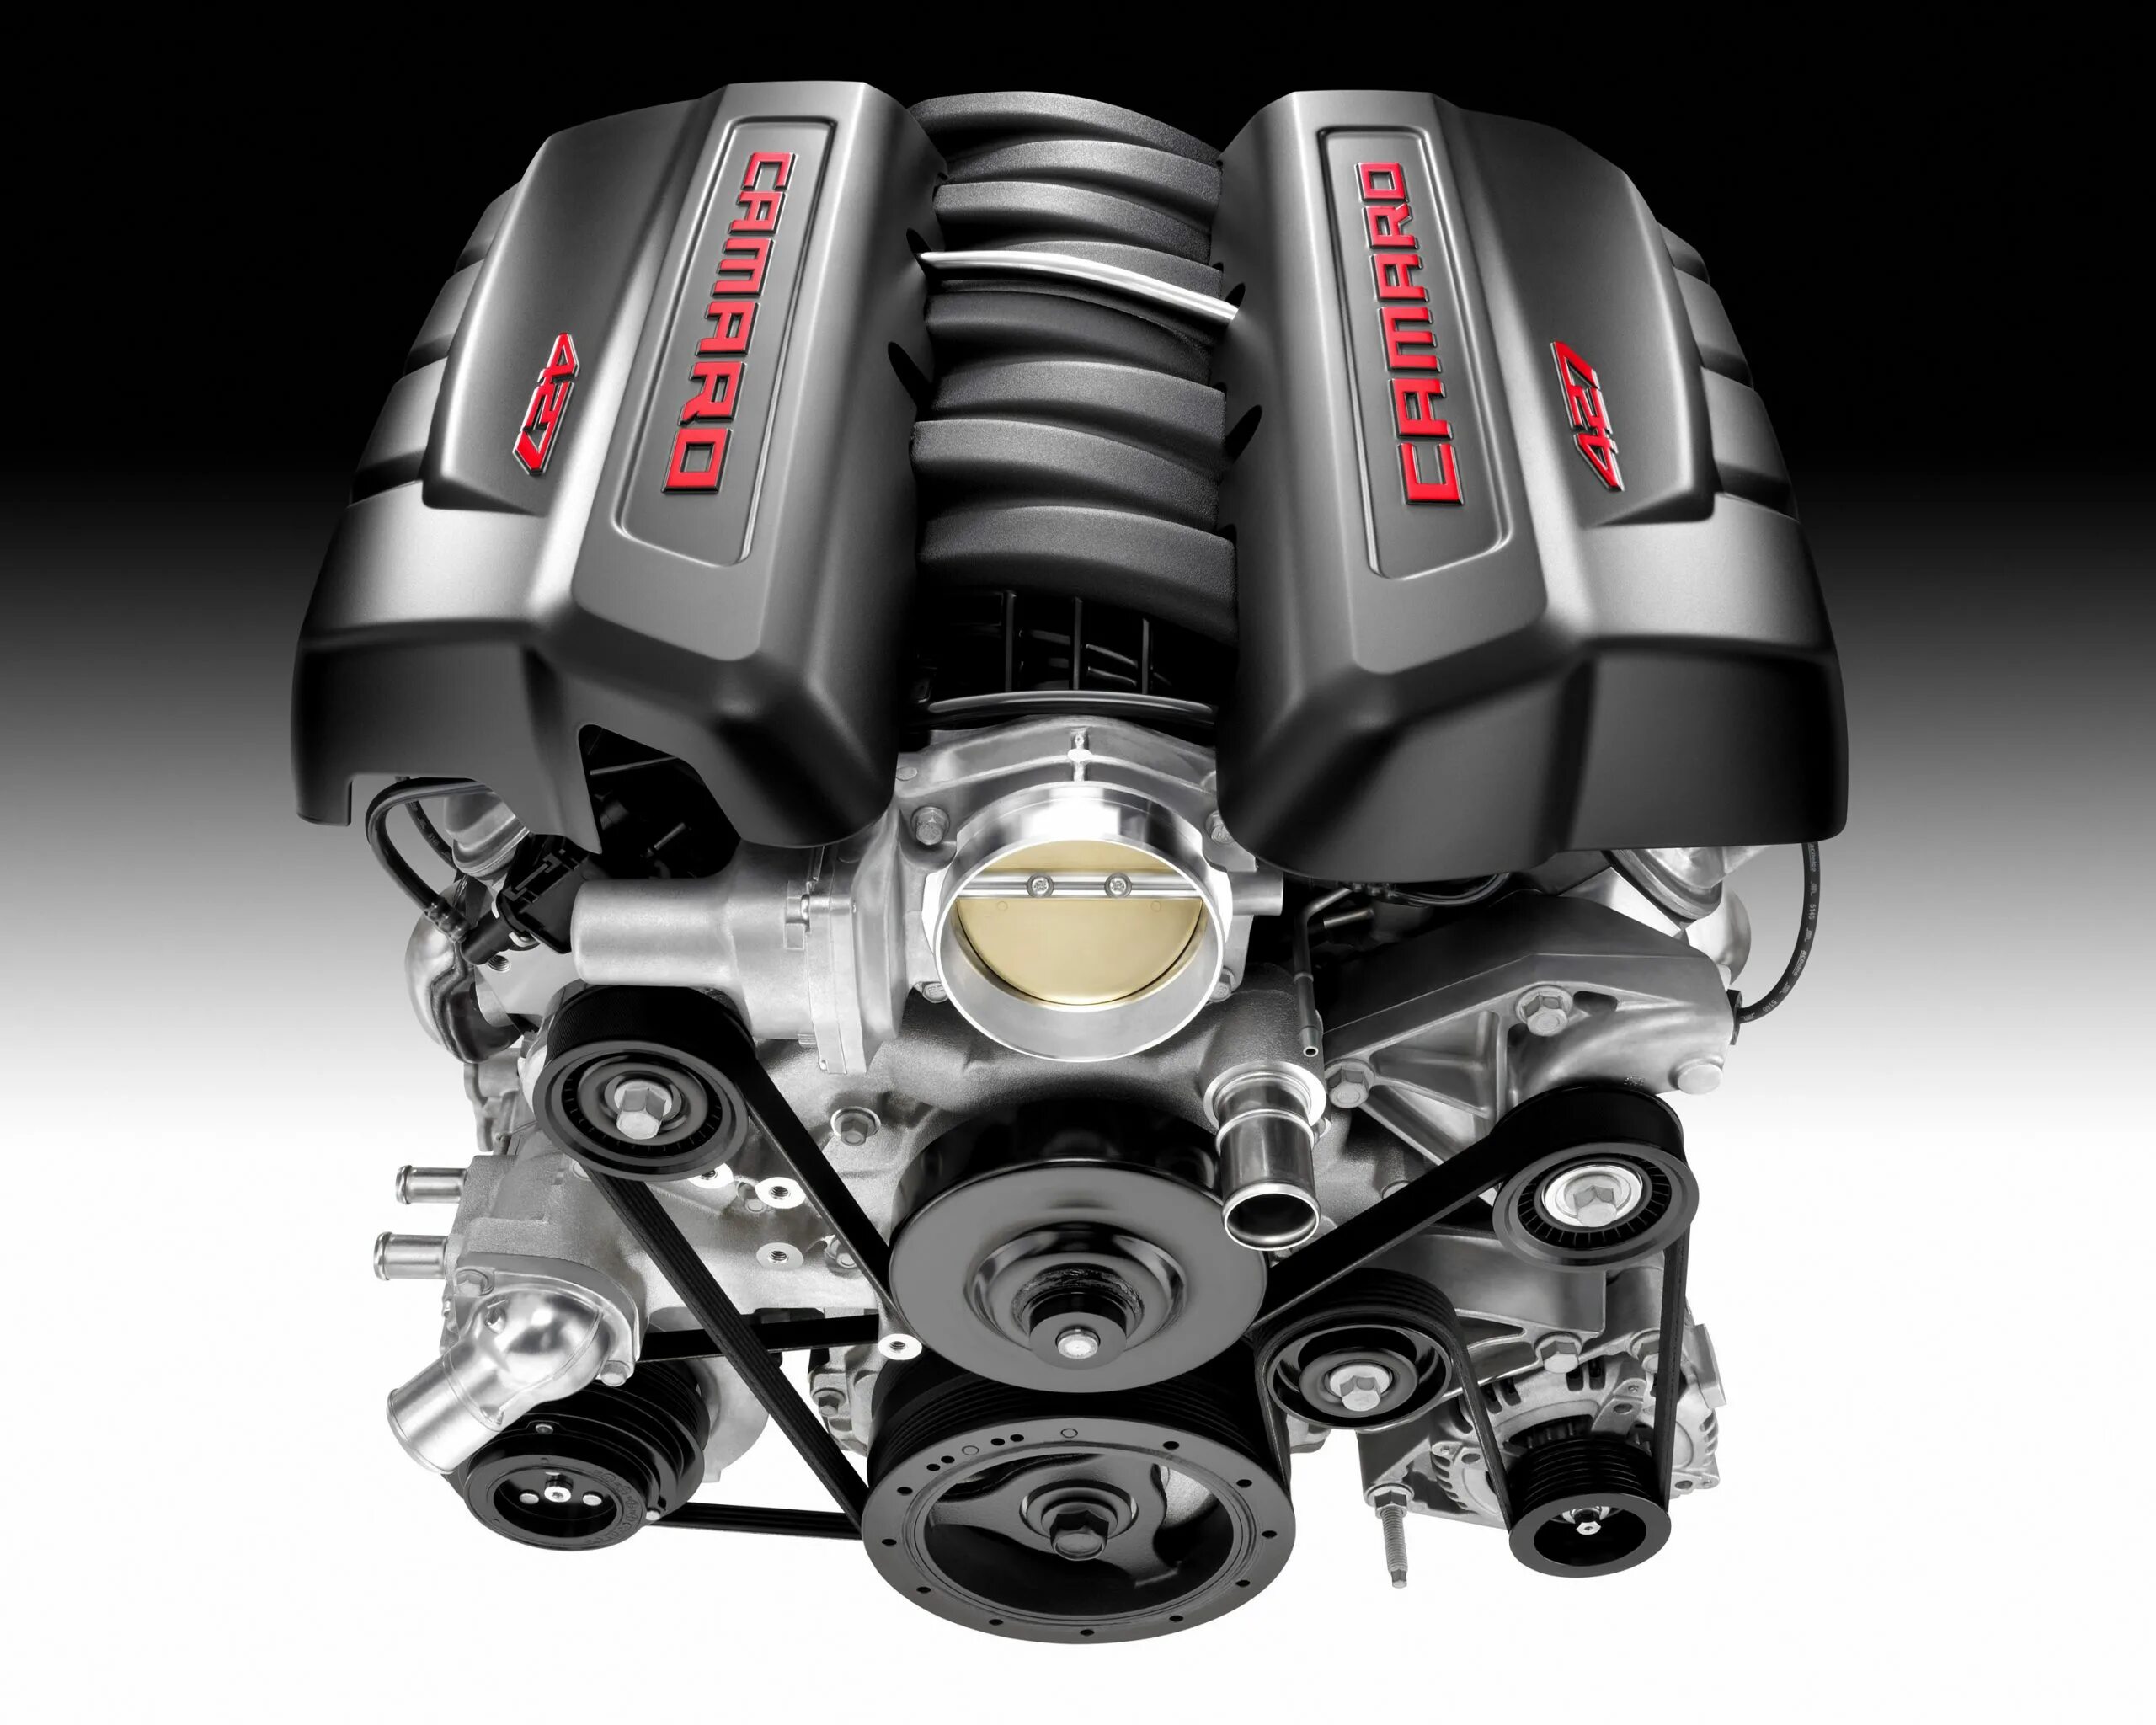 Chevrolet Camaro v8 мотор. Двигатель ls7 v8. Двигатель Шевроле в8. Камаро 6.2 v8. V 8.00